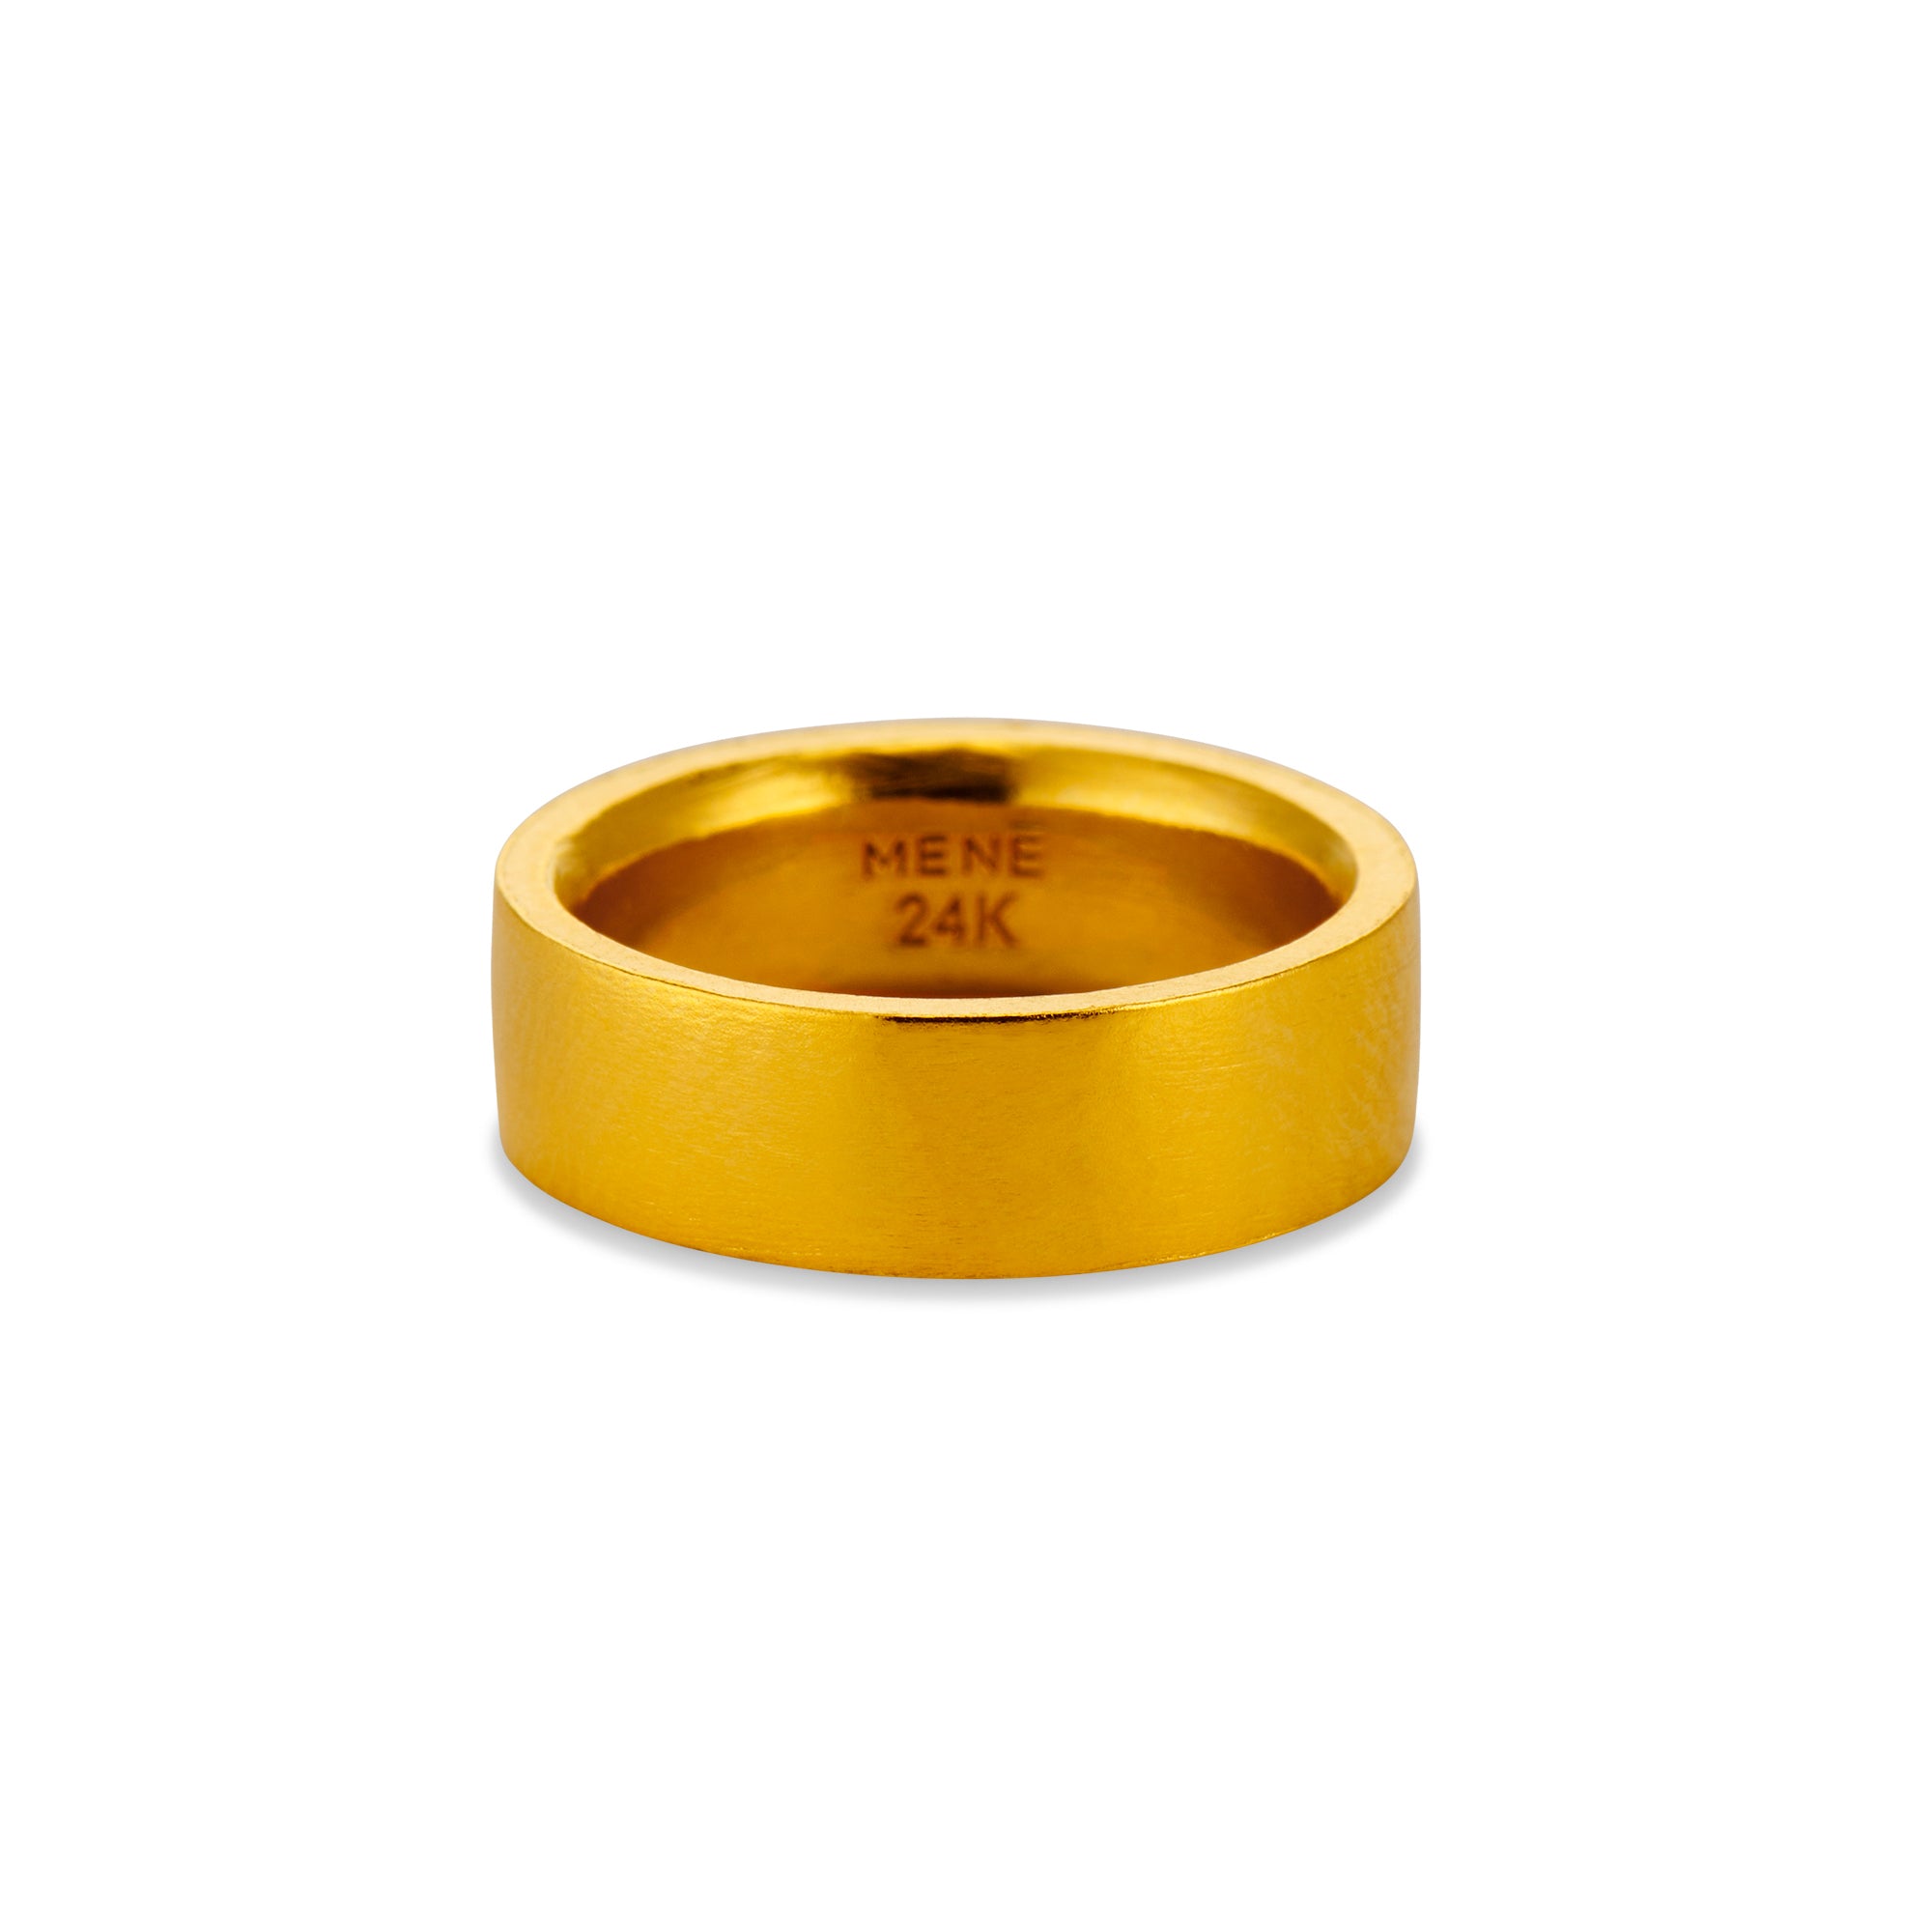 Minimalist Wedding Ring Set in Gold | KLENOTA